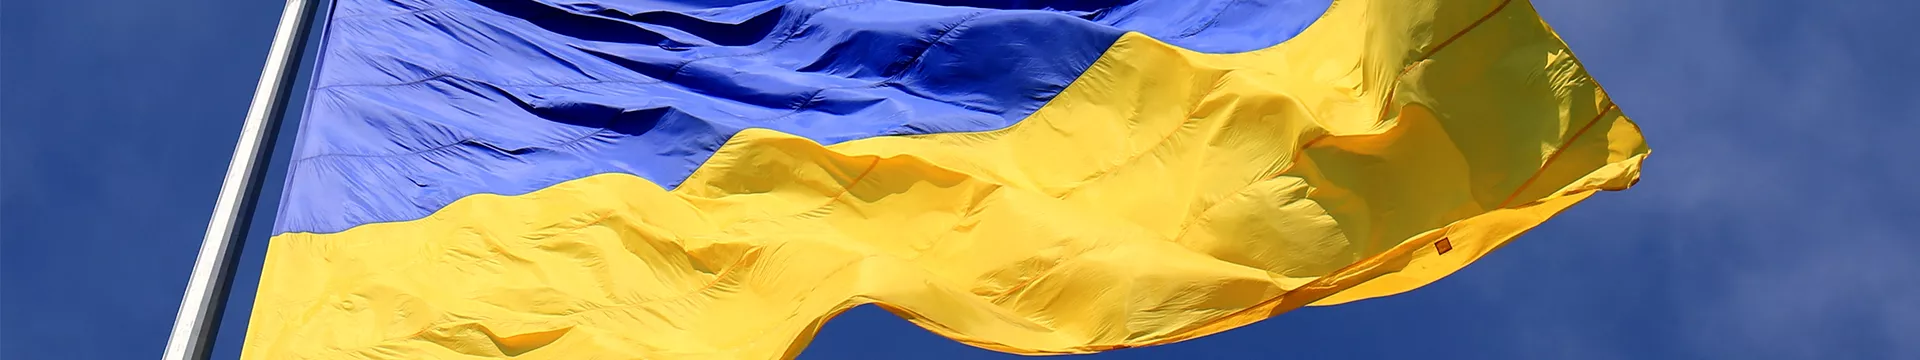 Ukraine flag fluttering against a blue sky